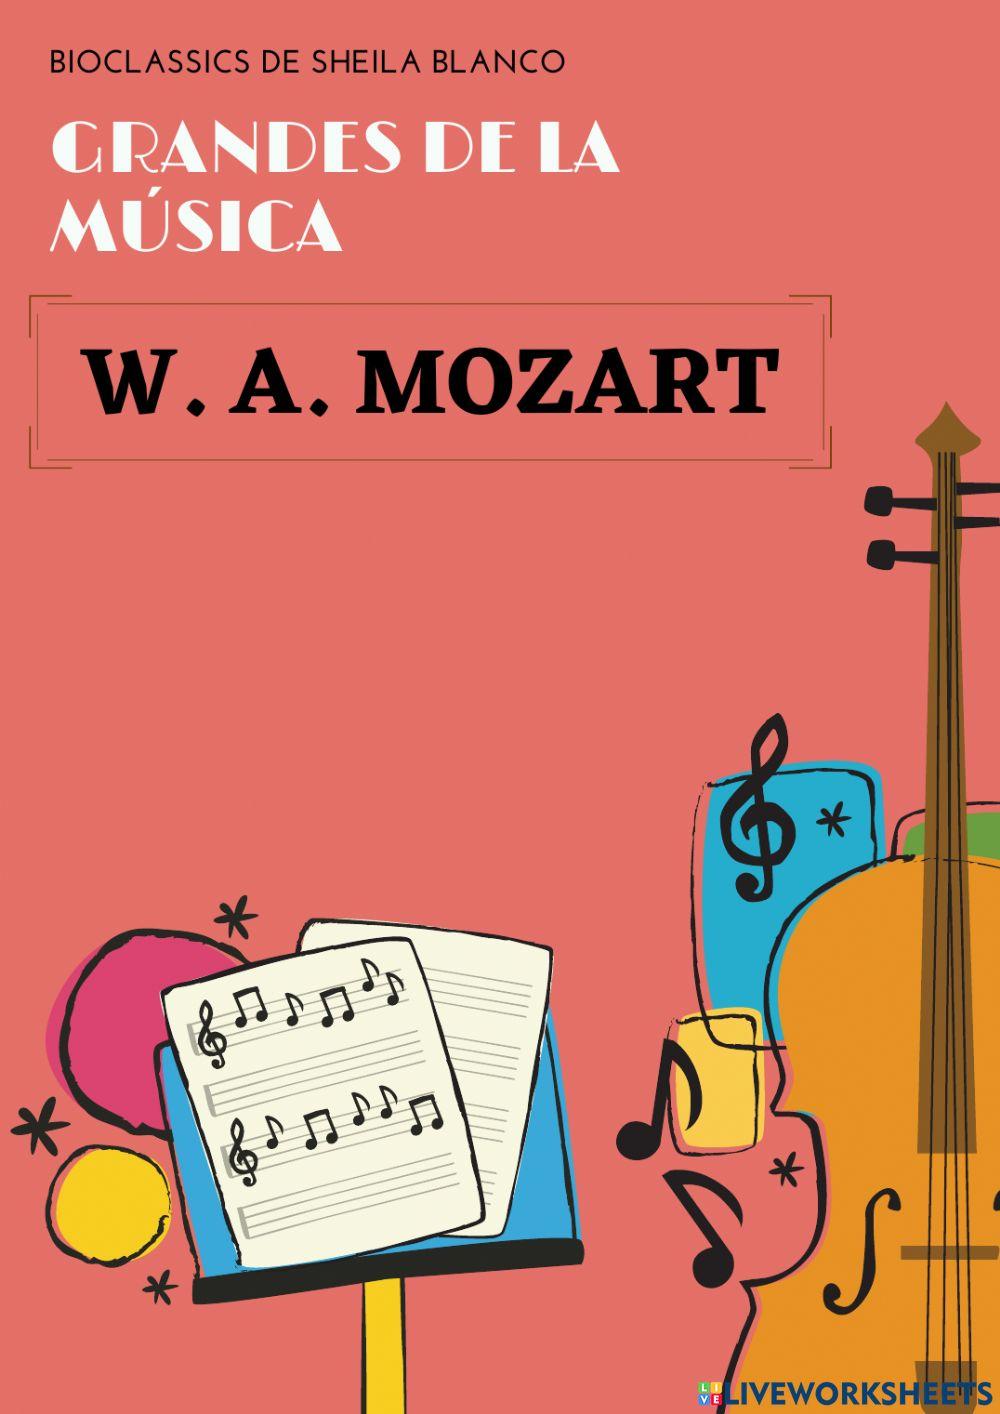 Mozart BioClassics Sheila Blanco